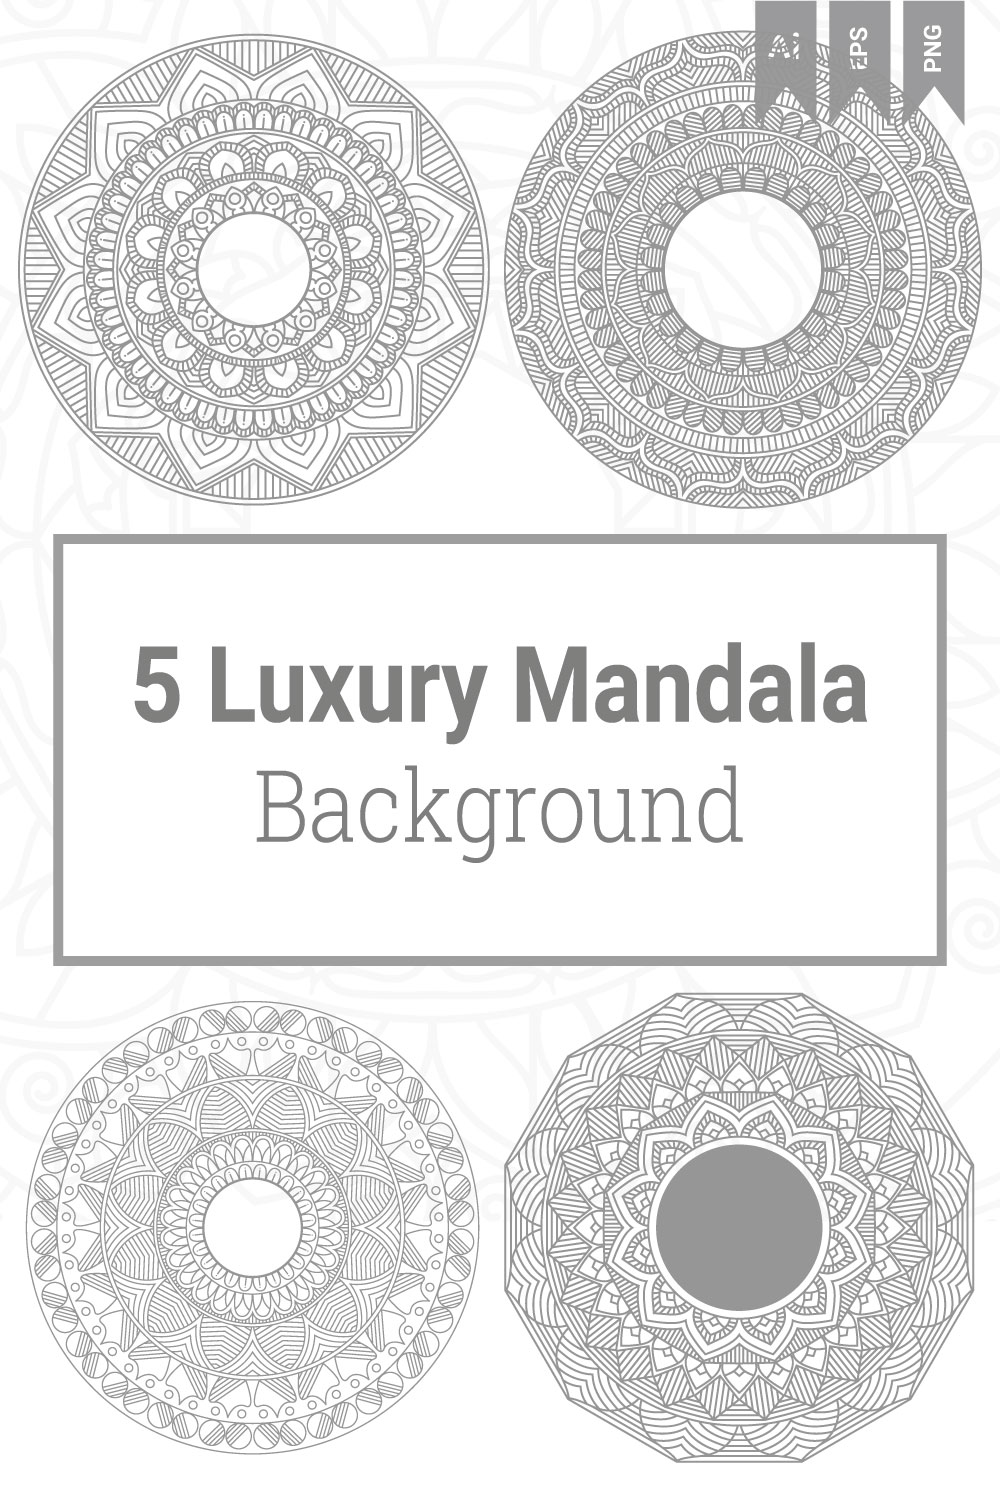 Luxury Mandala Vector with Golden Style Background pinterest image.